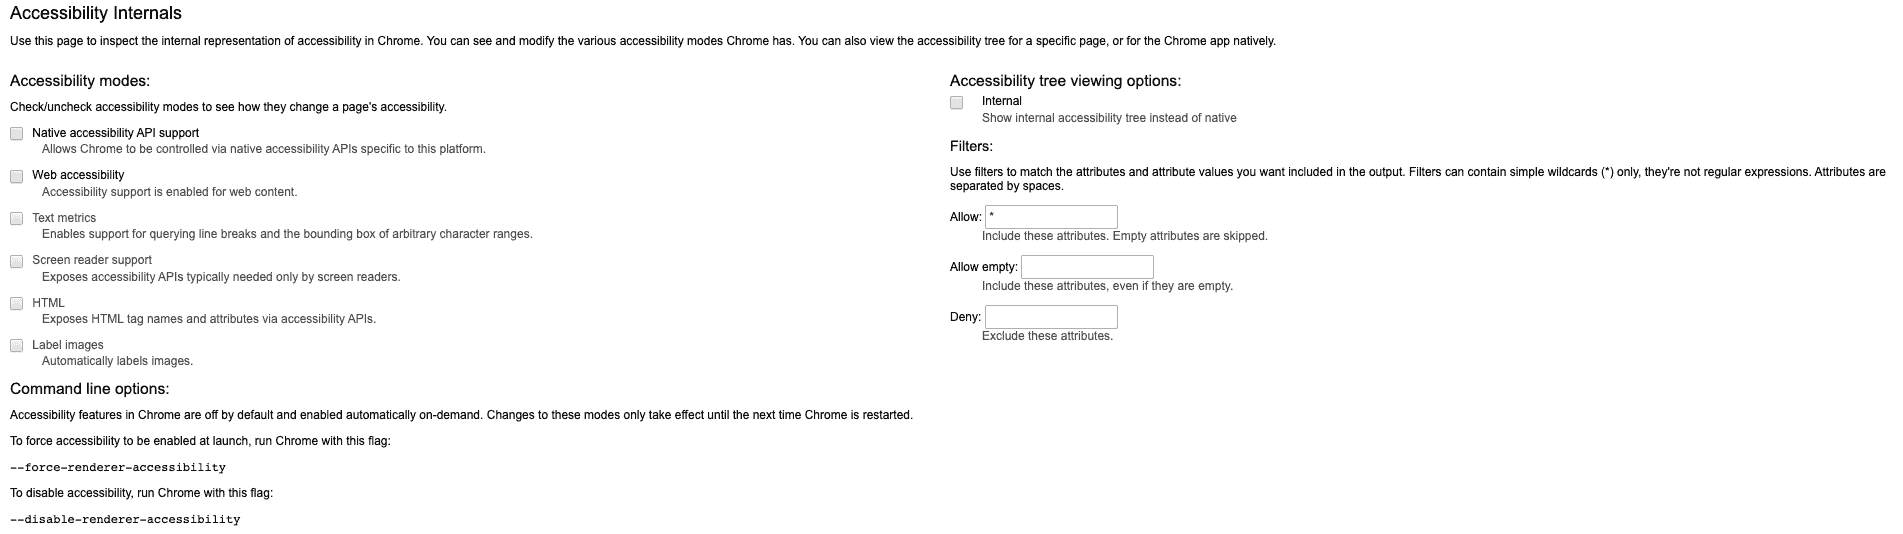 Google Chrome Accessibility